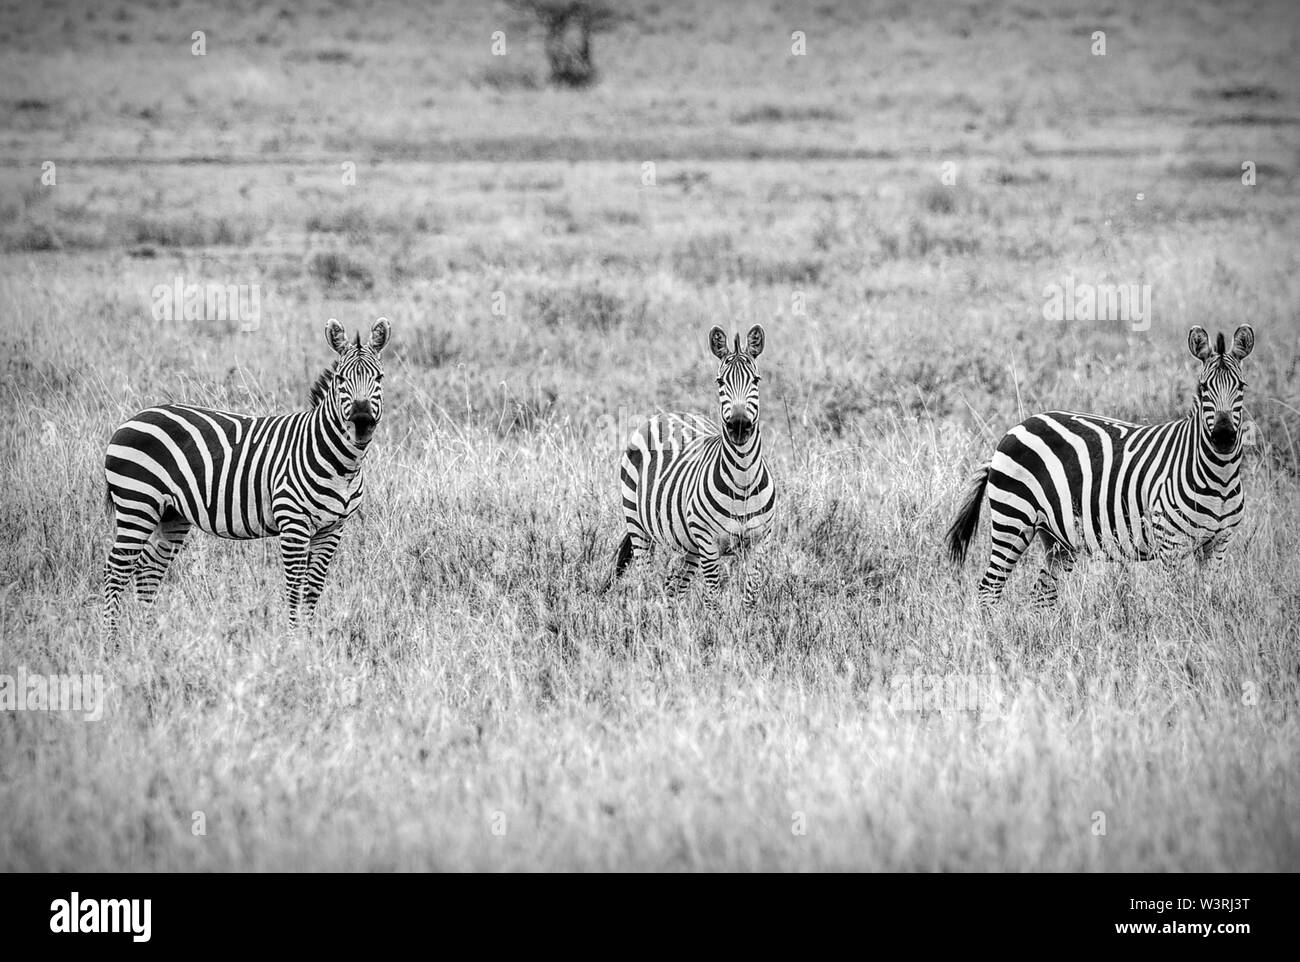 Various wildlife are seen in Serengeti, Tanzania, Africa including elephants, zebras, hippo, birds, wildebeest, nile crocodiles, eagles and leopards. Stock Photo